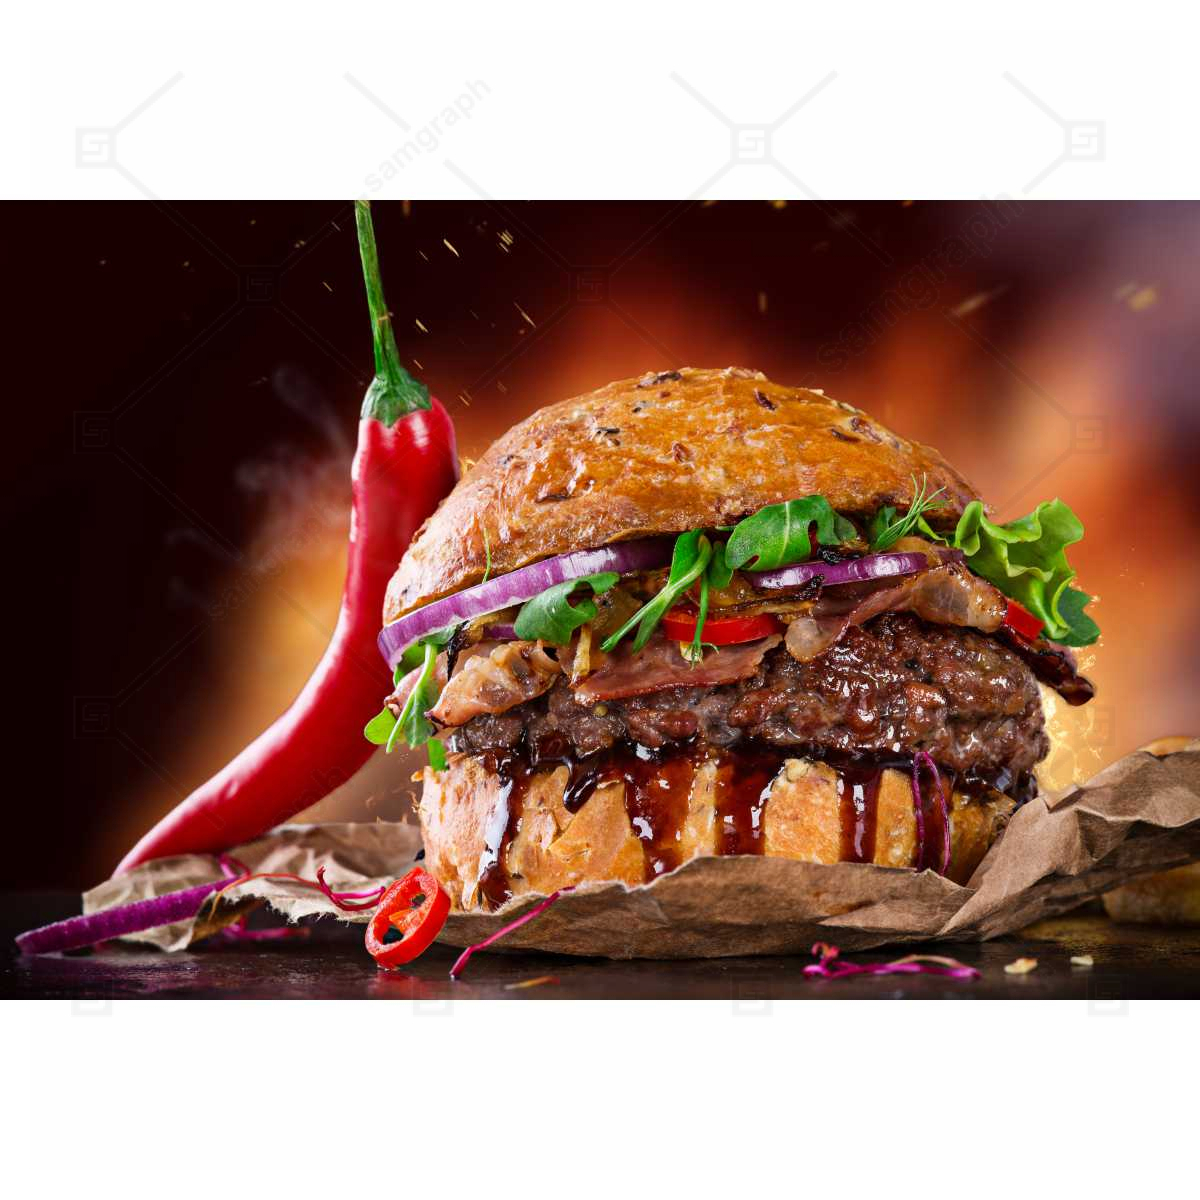 High quality photo of juicy hamburger with fire and pepper lettuce onion parsley 1 وکتور دلیوری پیتزا و موتور و باکس غذا